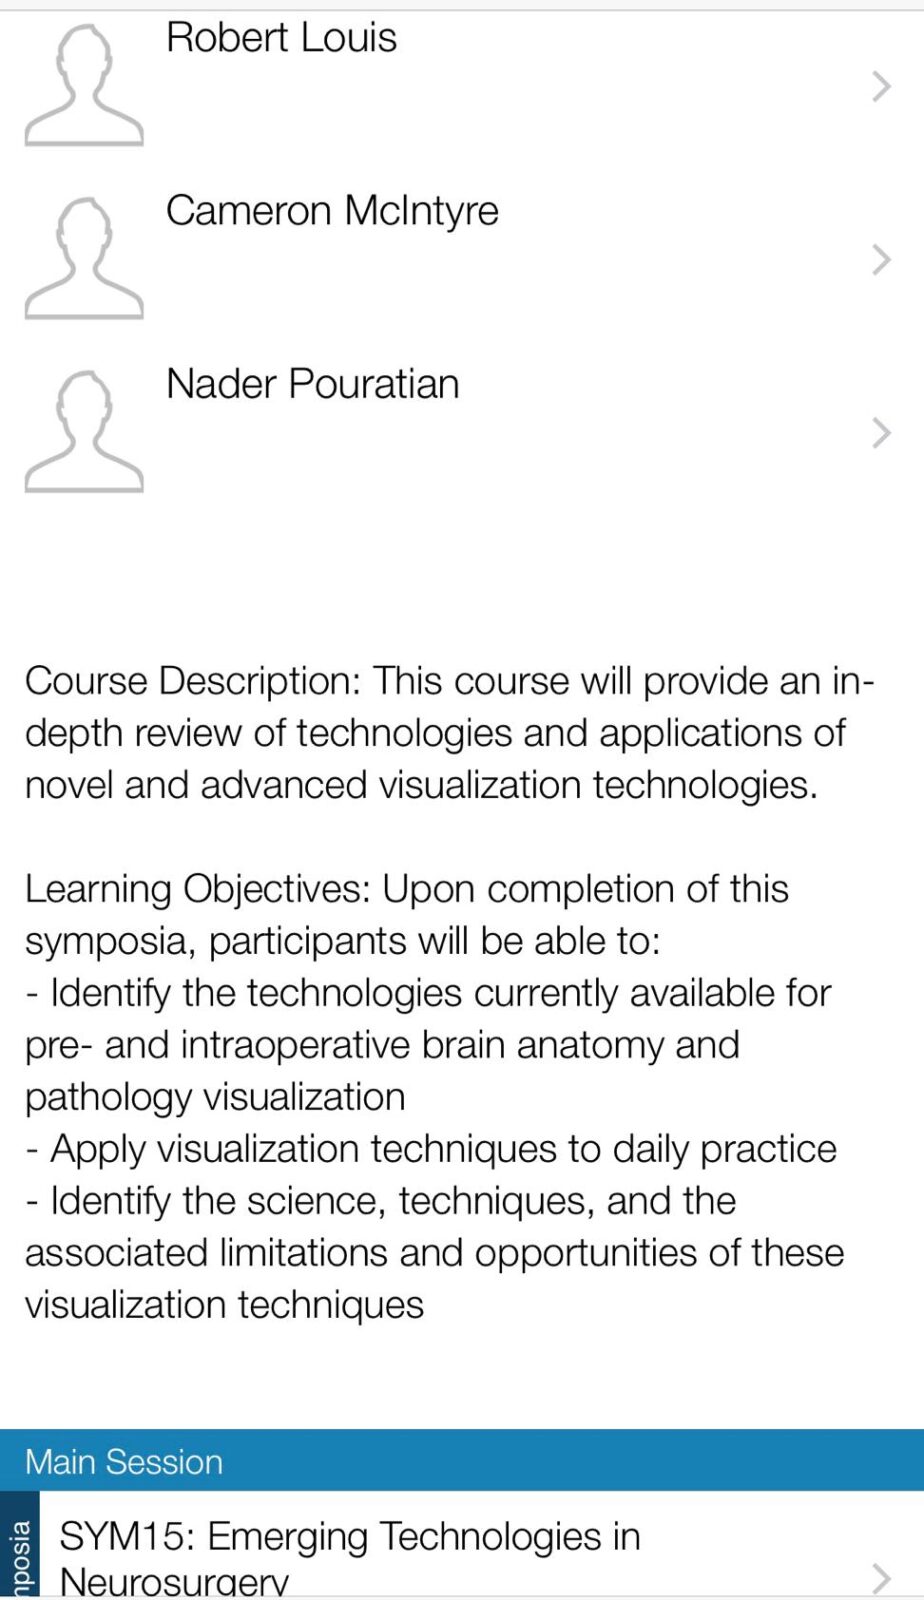 Screenshot of Presentation on Emerging Technologies in Neurosurgery